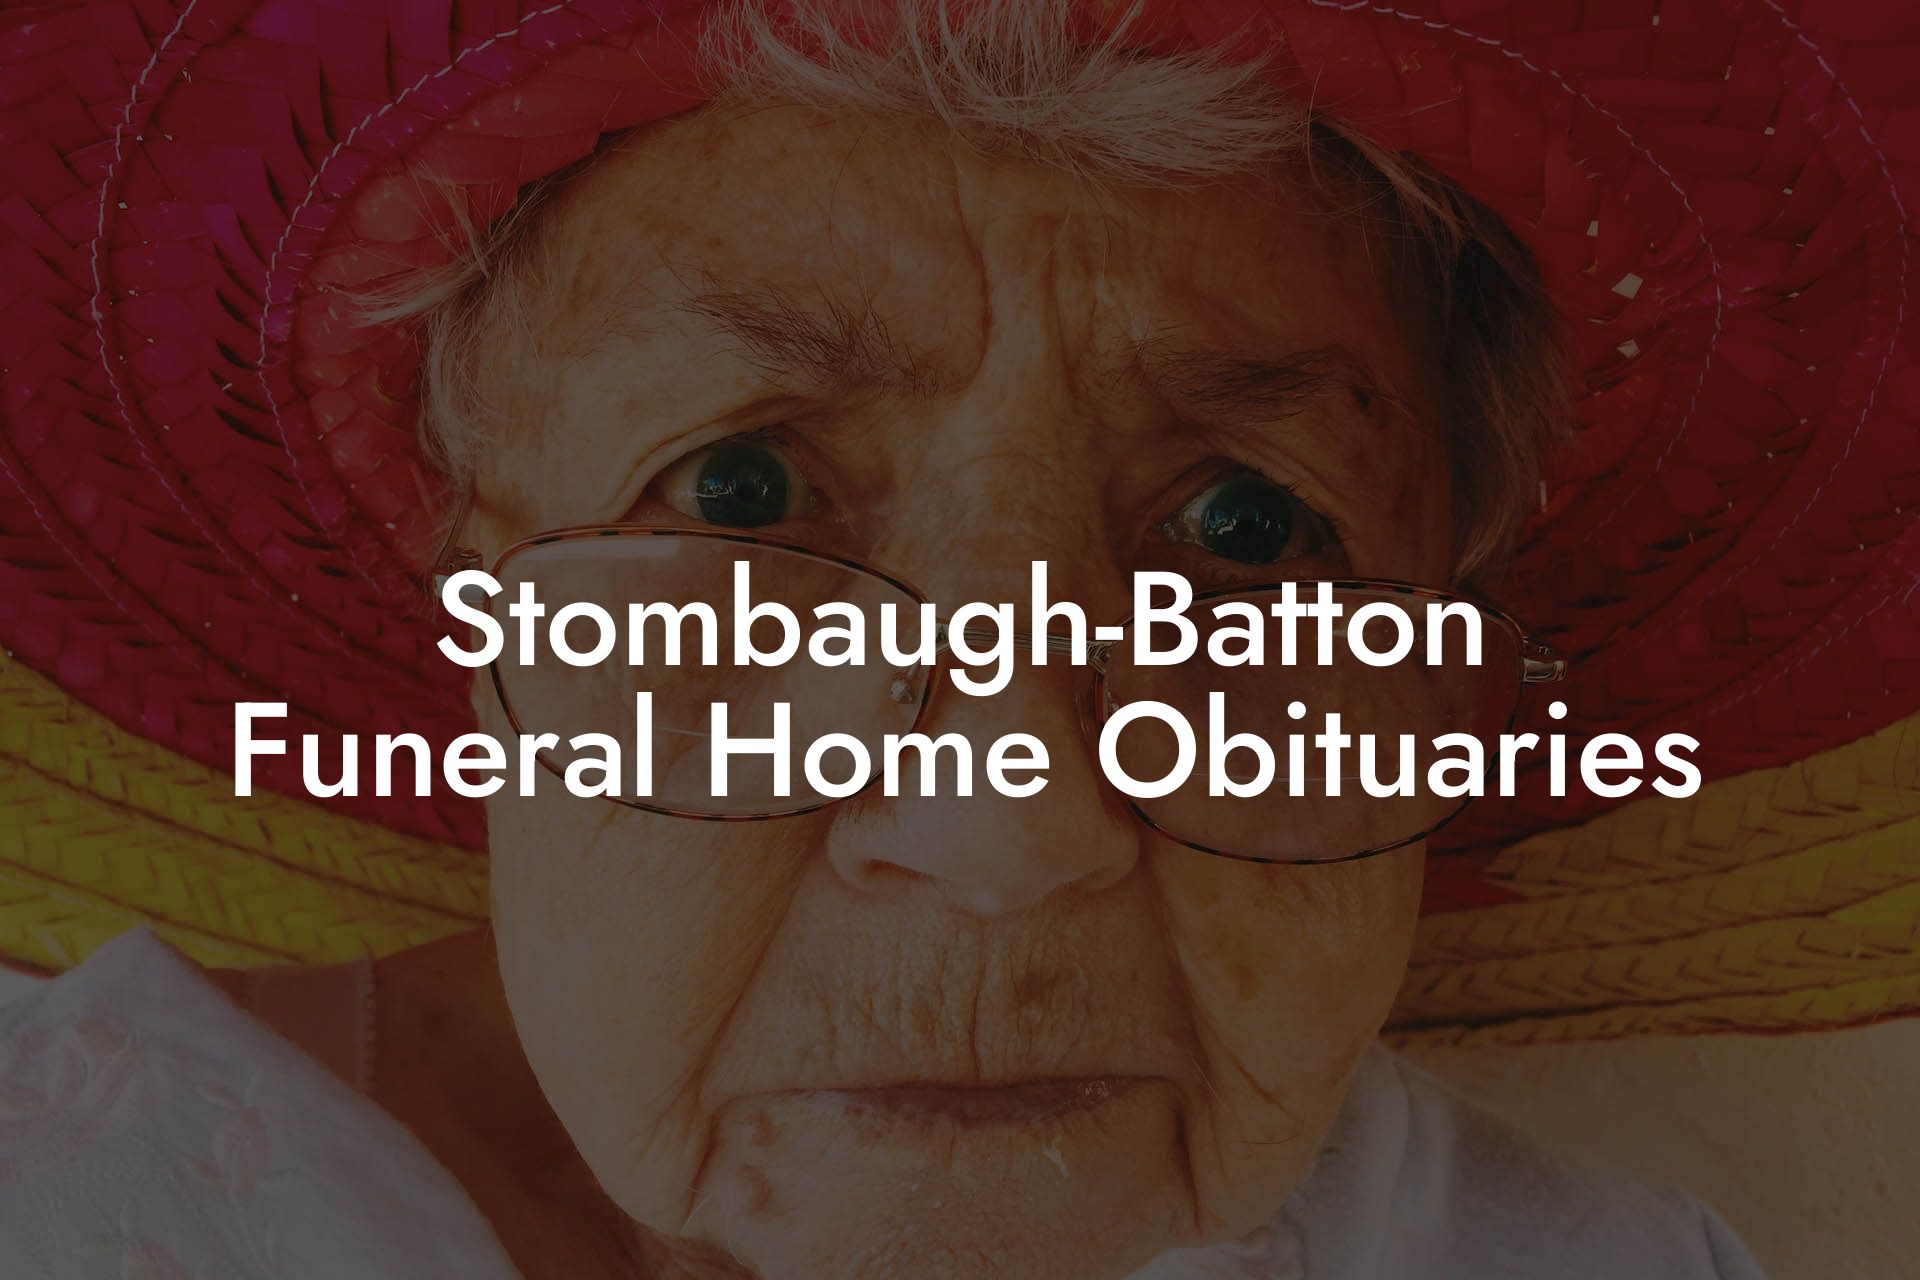 Stombaugh-Batton Funeral Home Obituaries